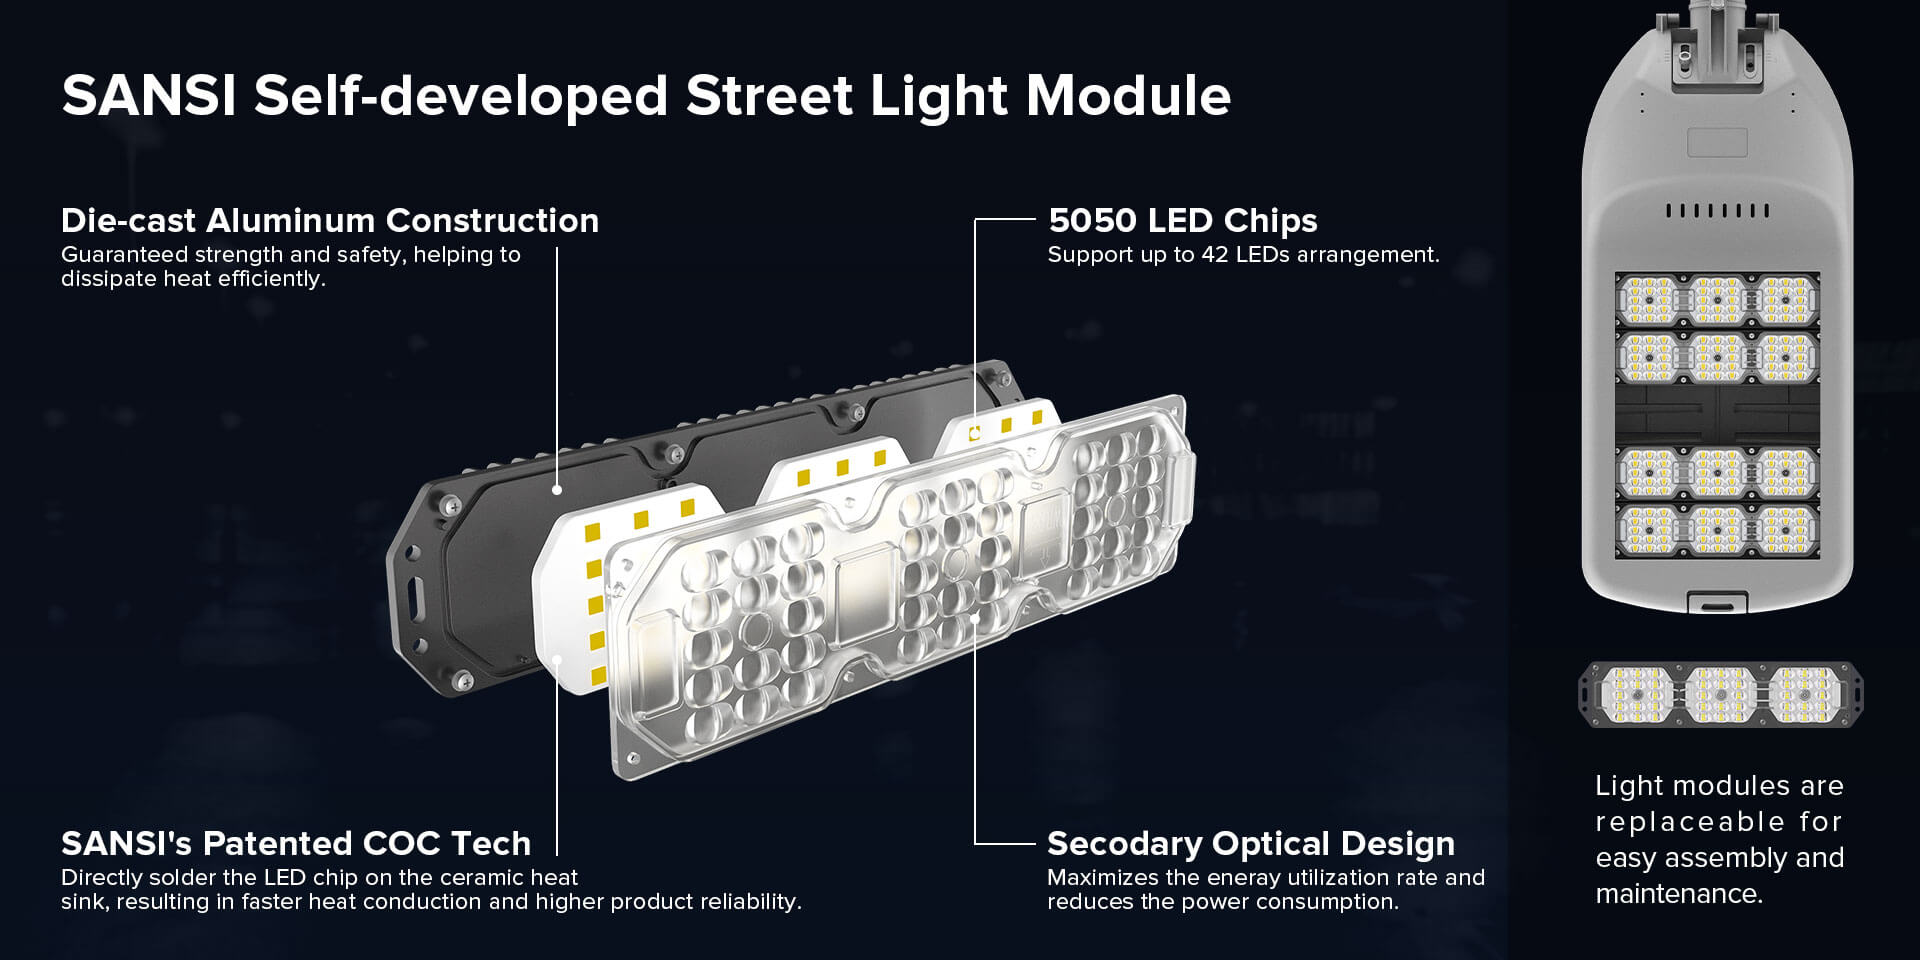 SANSI Self-developed Street Light Module: 1.Die-cast Aluminum Construction. 2. 5050 LED Chips. 3. SANSI's Patented COC Tech. 4. Secodary Optical Design.